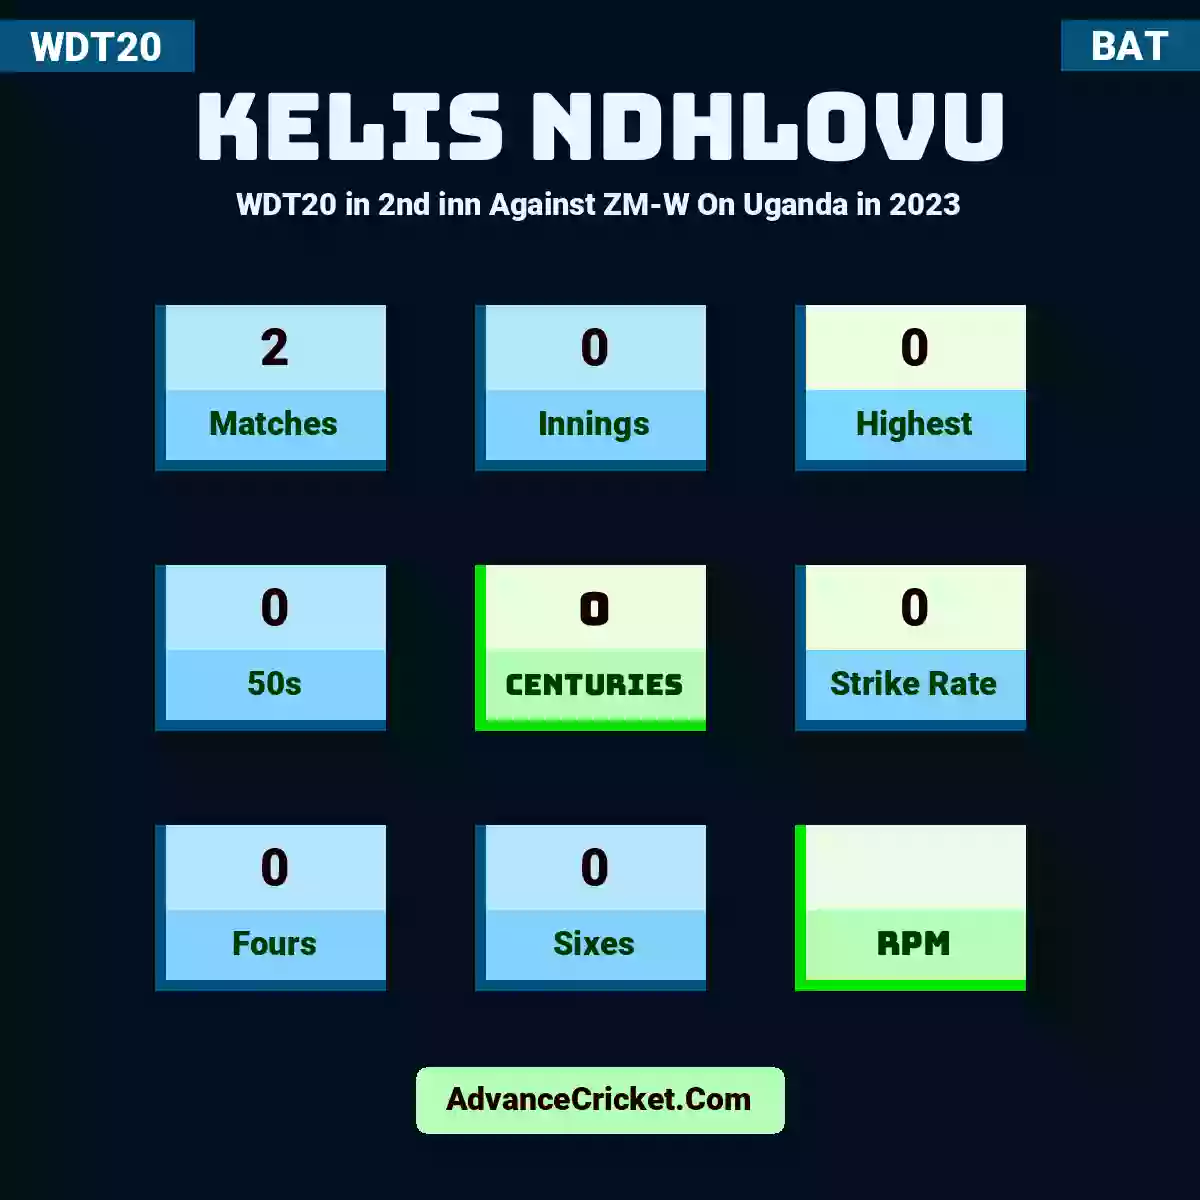 Kelis Ndhlovu WDT20  in 2nd inn Against ZM-W On Uganda in 2023, Kelis Ndhlovu played 2 matches, scored 0 runs as highest, 0 half-centuries, and 0 centuries, with a strike rate of 0. K.Ndhlovu hit 0 fours and 0 sixes.